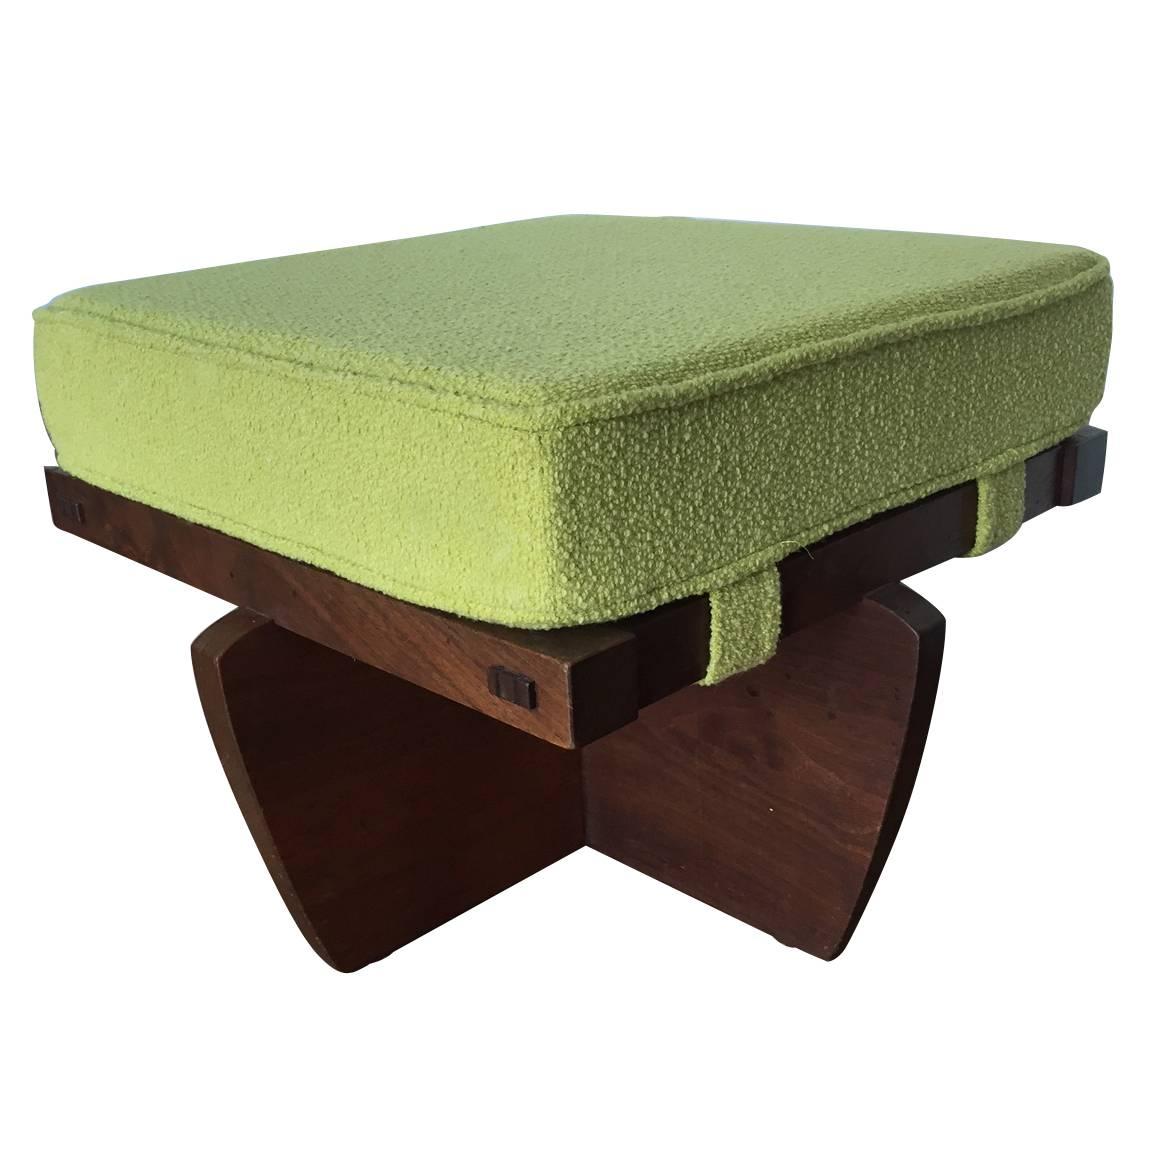 Walnut Greenrock Stool or Bench with cushion by George Nakashima